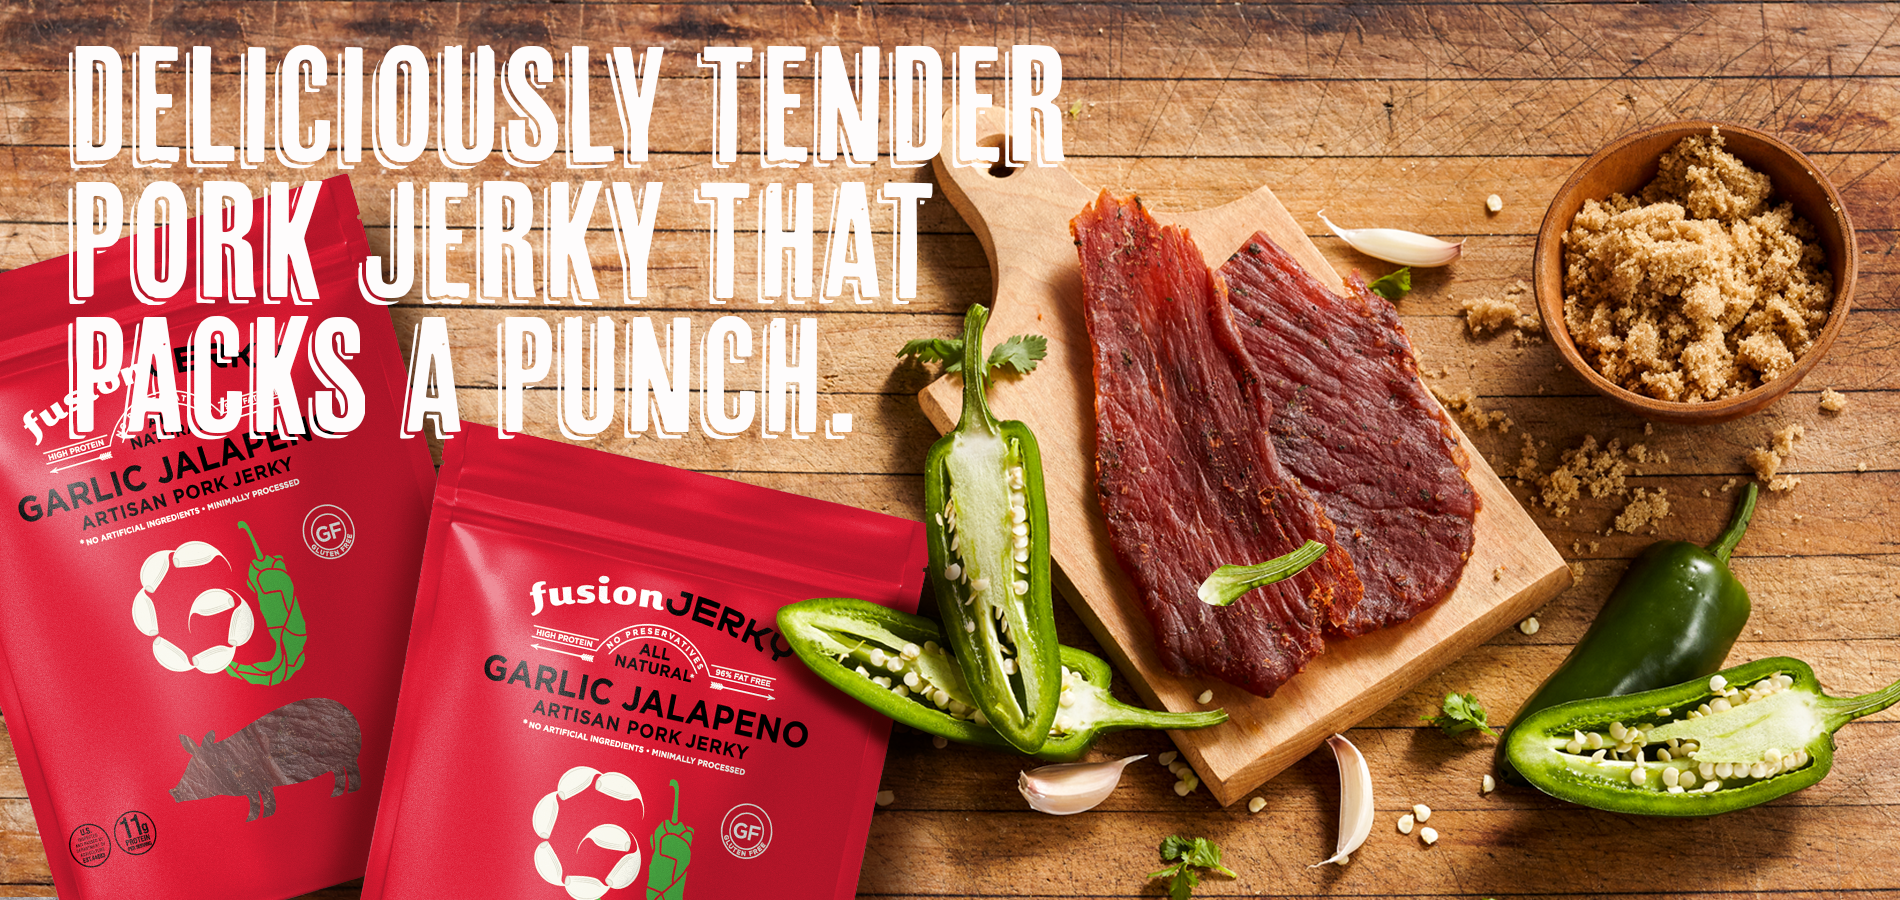 Fusion Jerky Garlic Jalapeno Pork Jerky. Deliciously tender pork jerky that packs a punch.